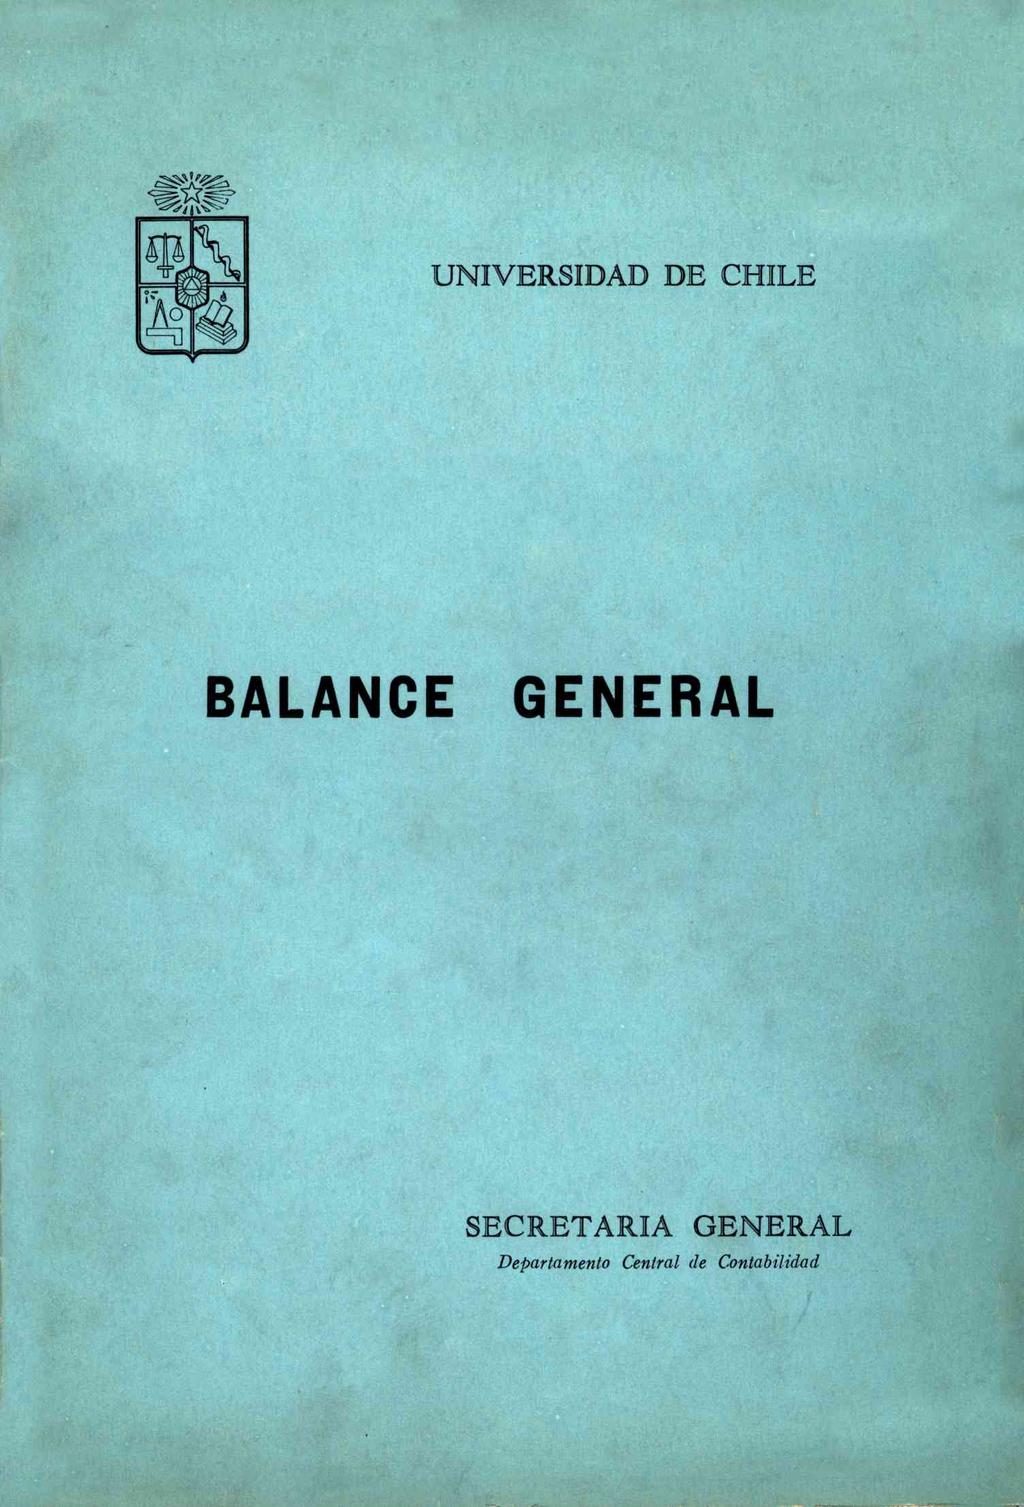 ffij tvs H UNIVERSIDAD DE CHILE BALANCE GENERAL